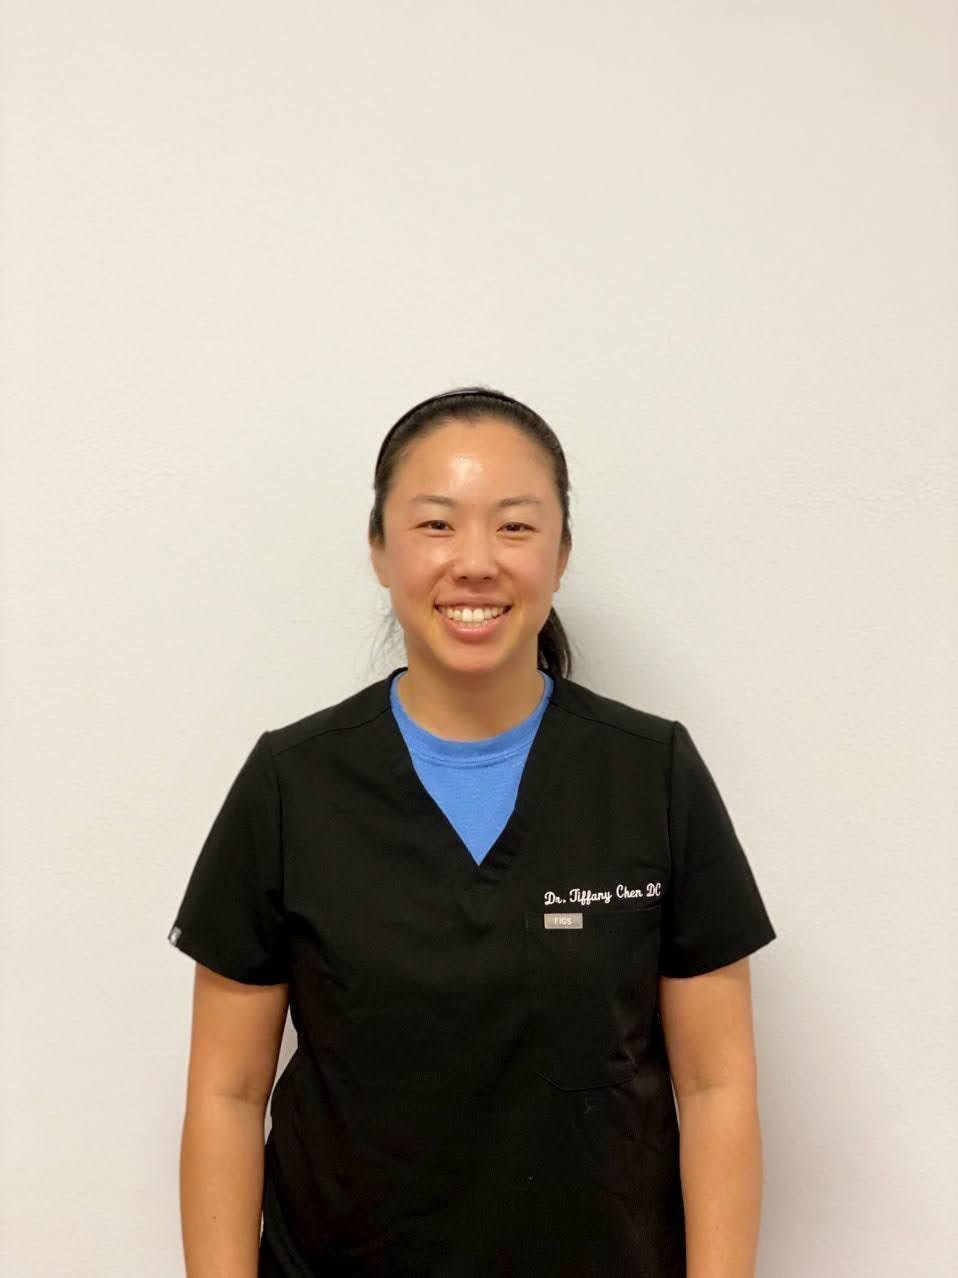 Dr. Tiffany Chen